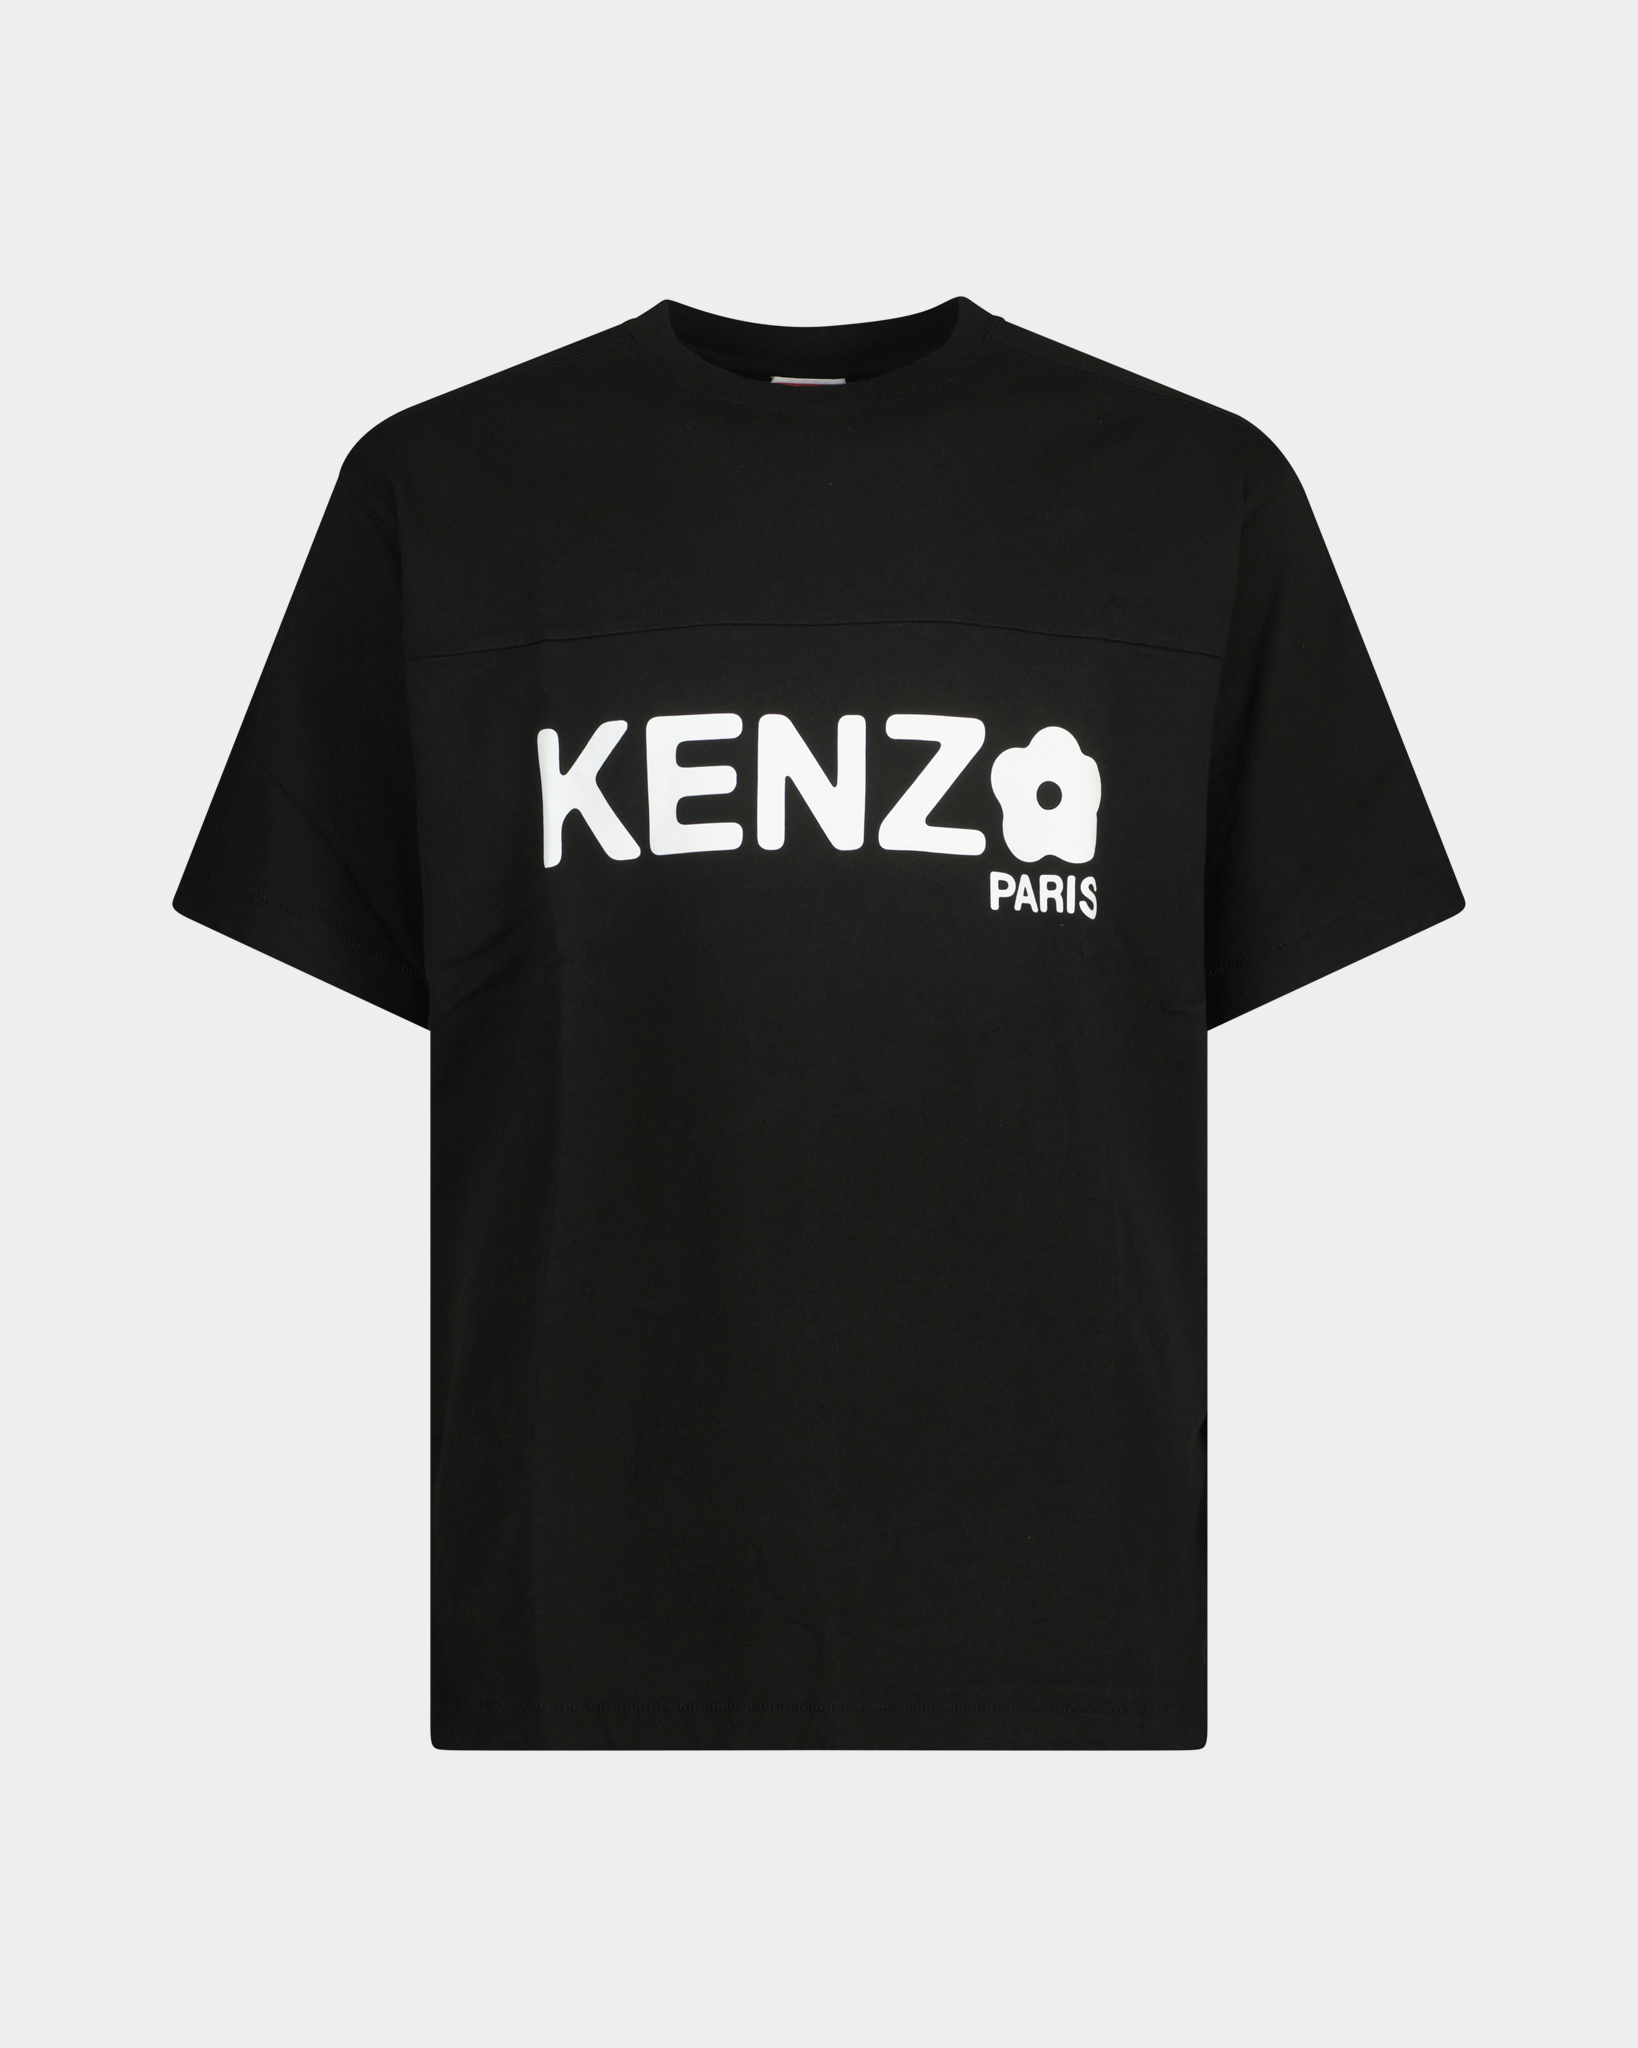 Verkeerd kennis ik zal sterk zijn Kenzo by Nigo Poppy T-shirt Zwart - Beachim